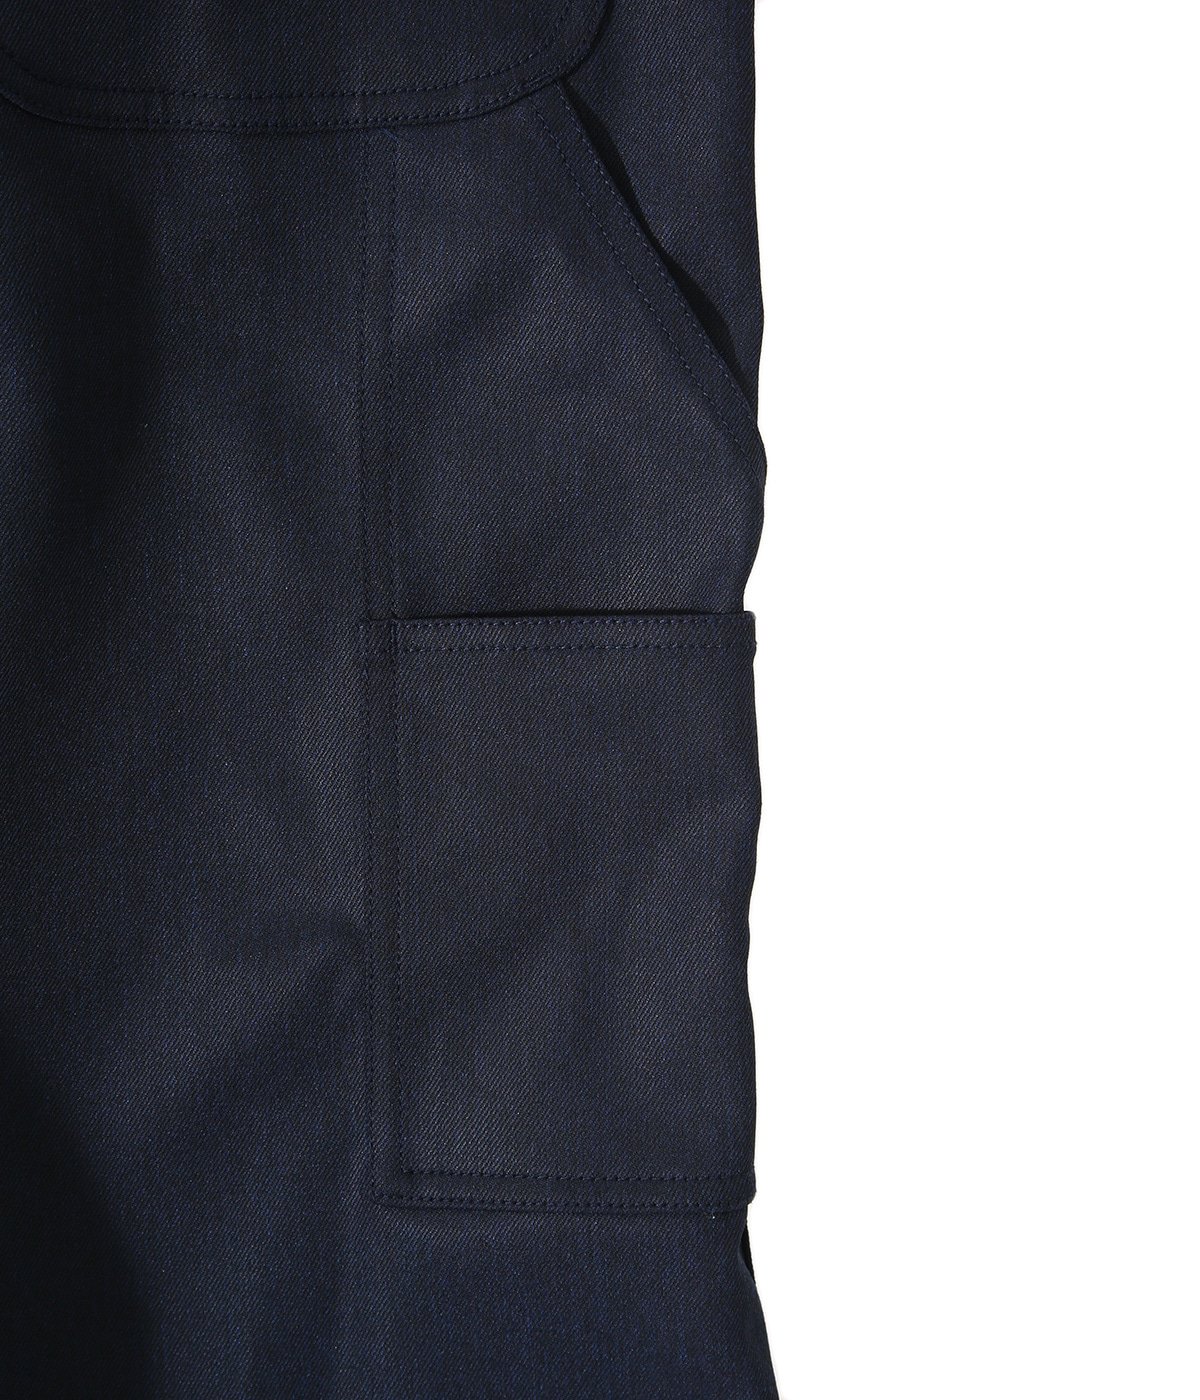 DAIWA PIER39 / TECH DEIM WORKERS PANTS ワークパンツ/カーゴパンツ パンツ メンズ 非常に良い